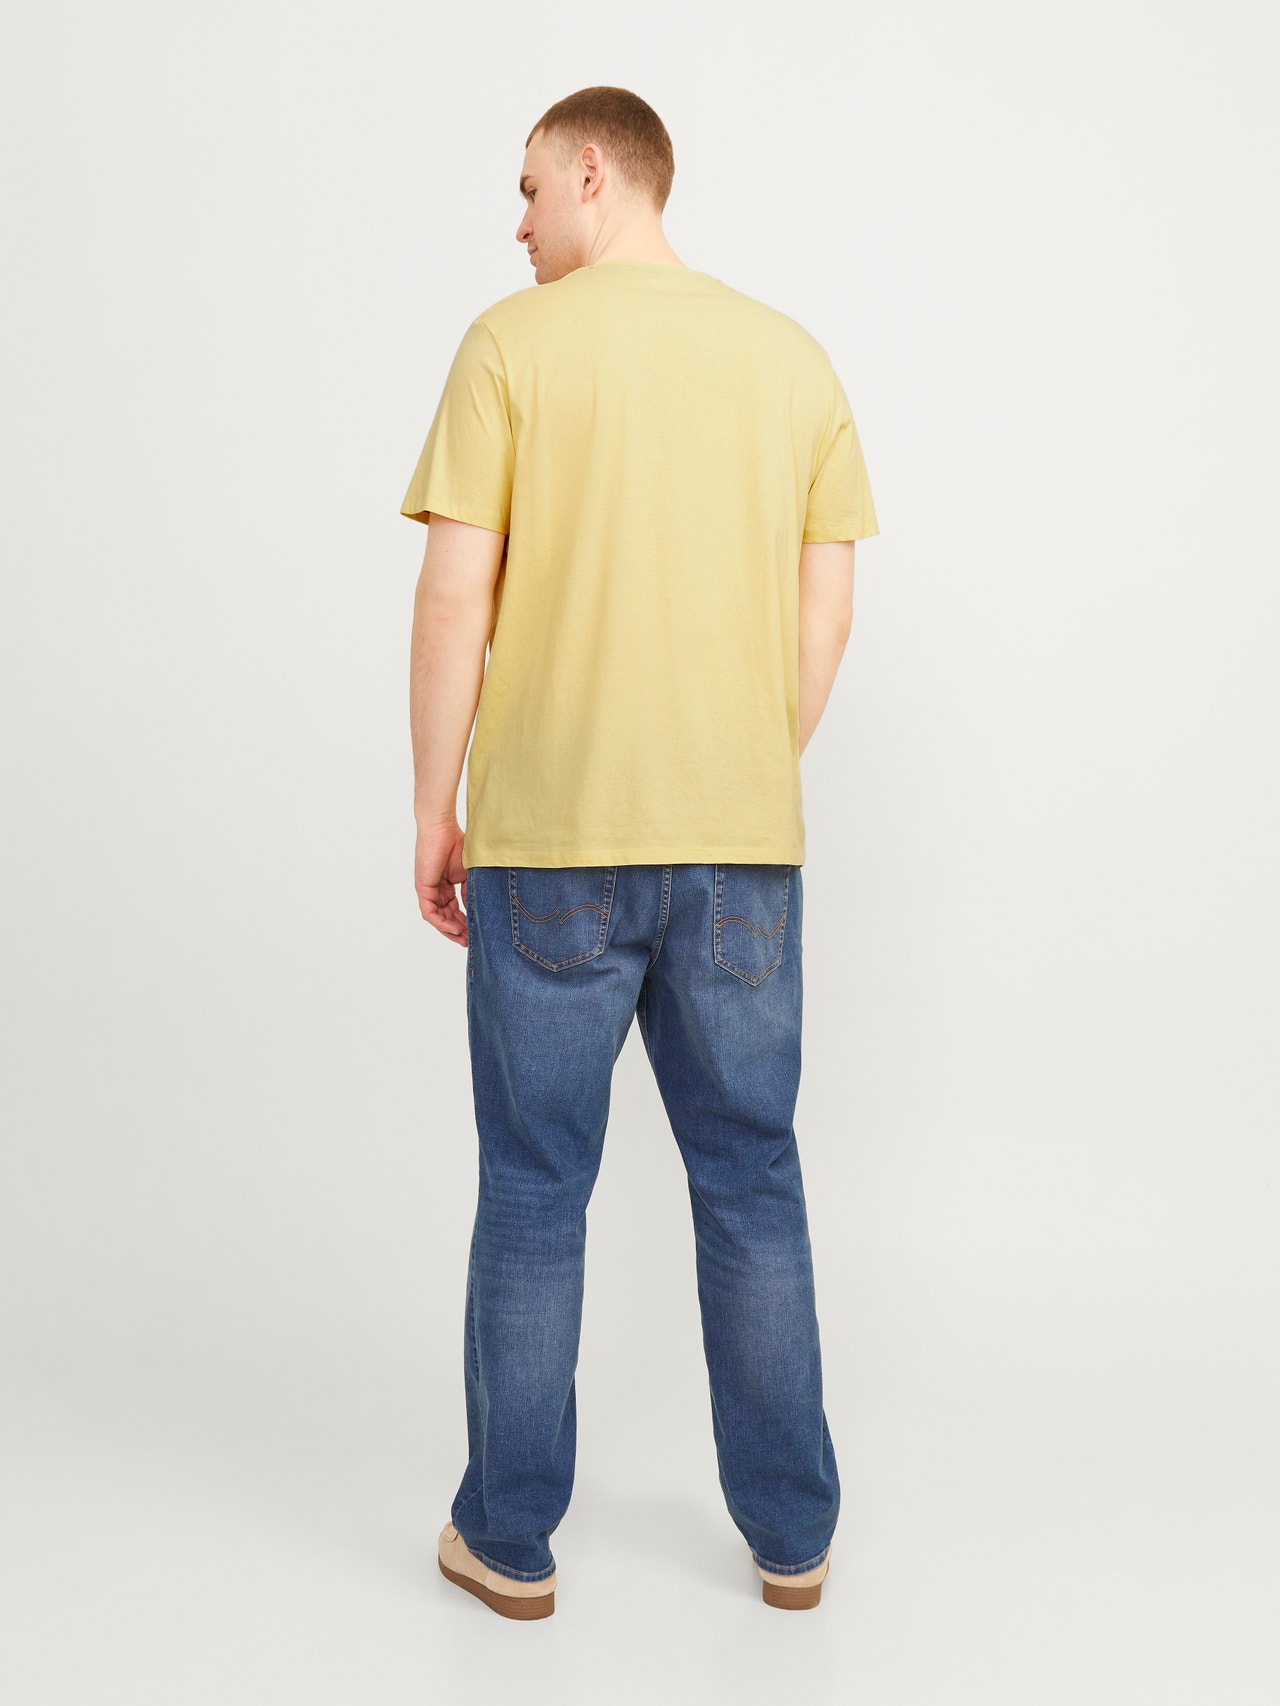 Jack & Jones Plus Size T-shirt Stampato -French Vanilla - 12254907